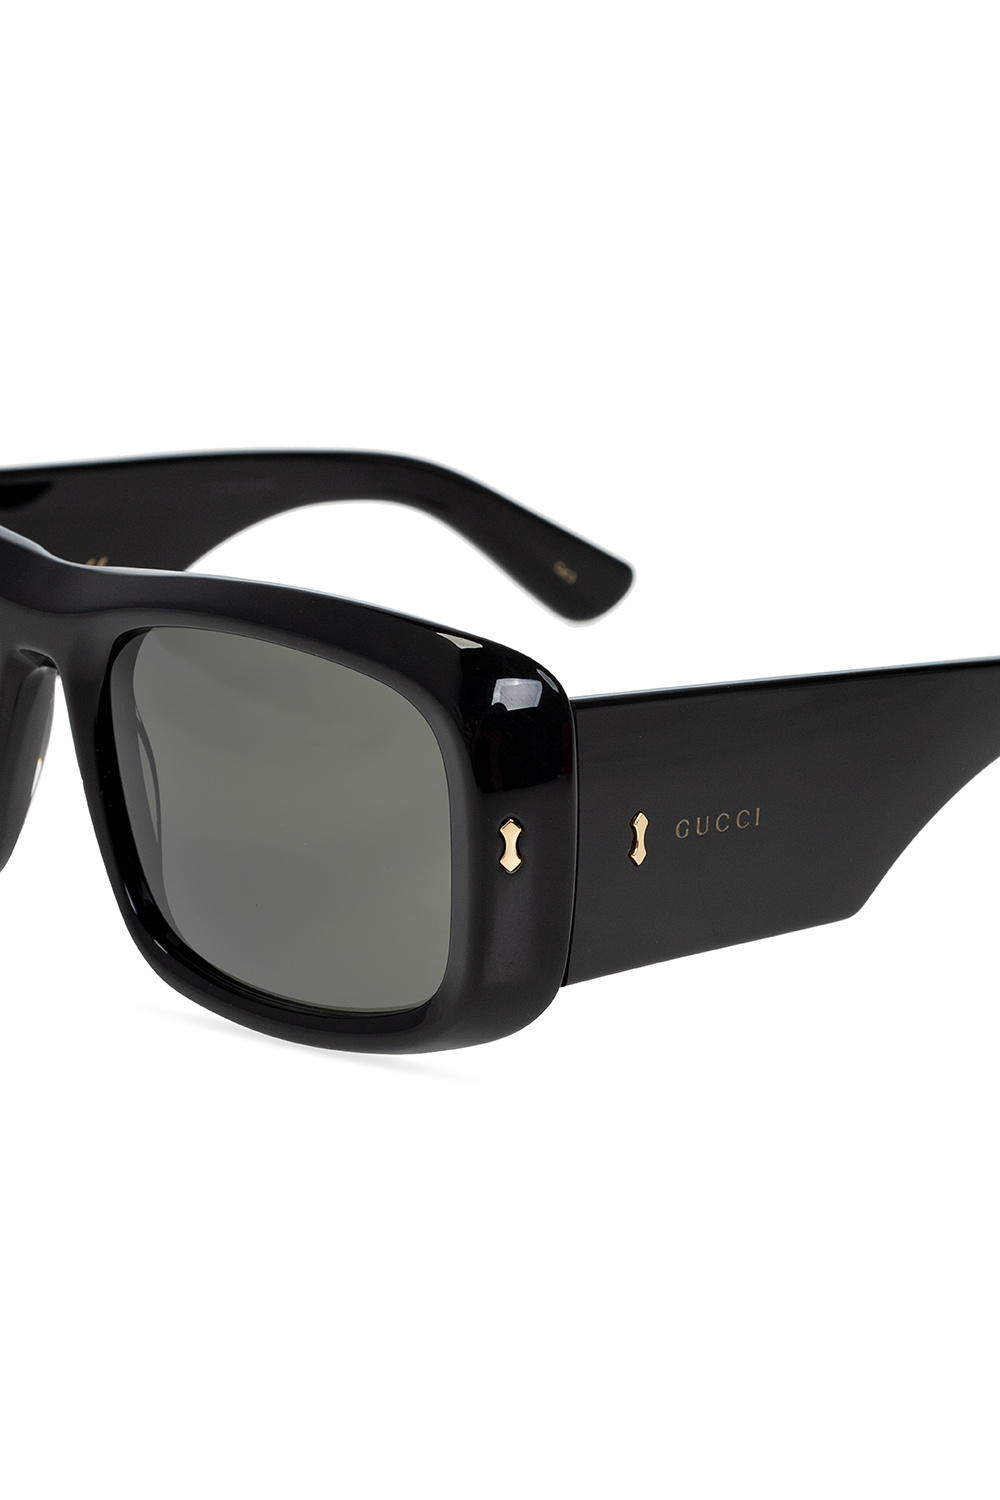 Gucci Gucci Eyewear embellished round frame sunglasses